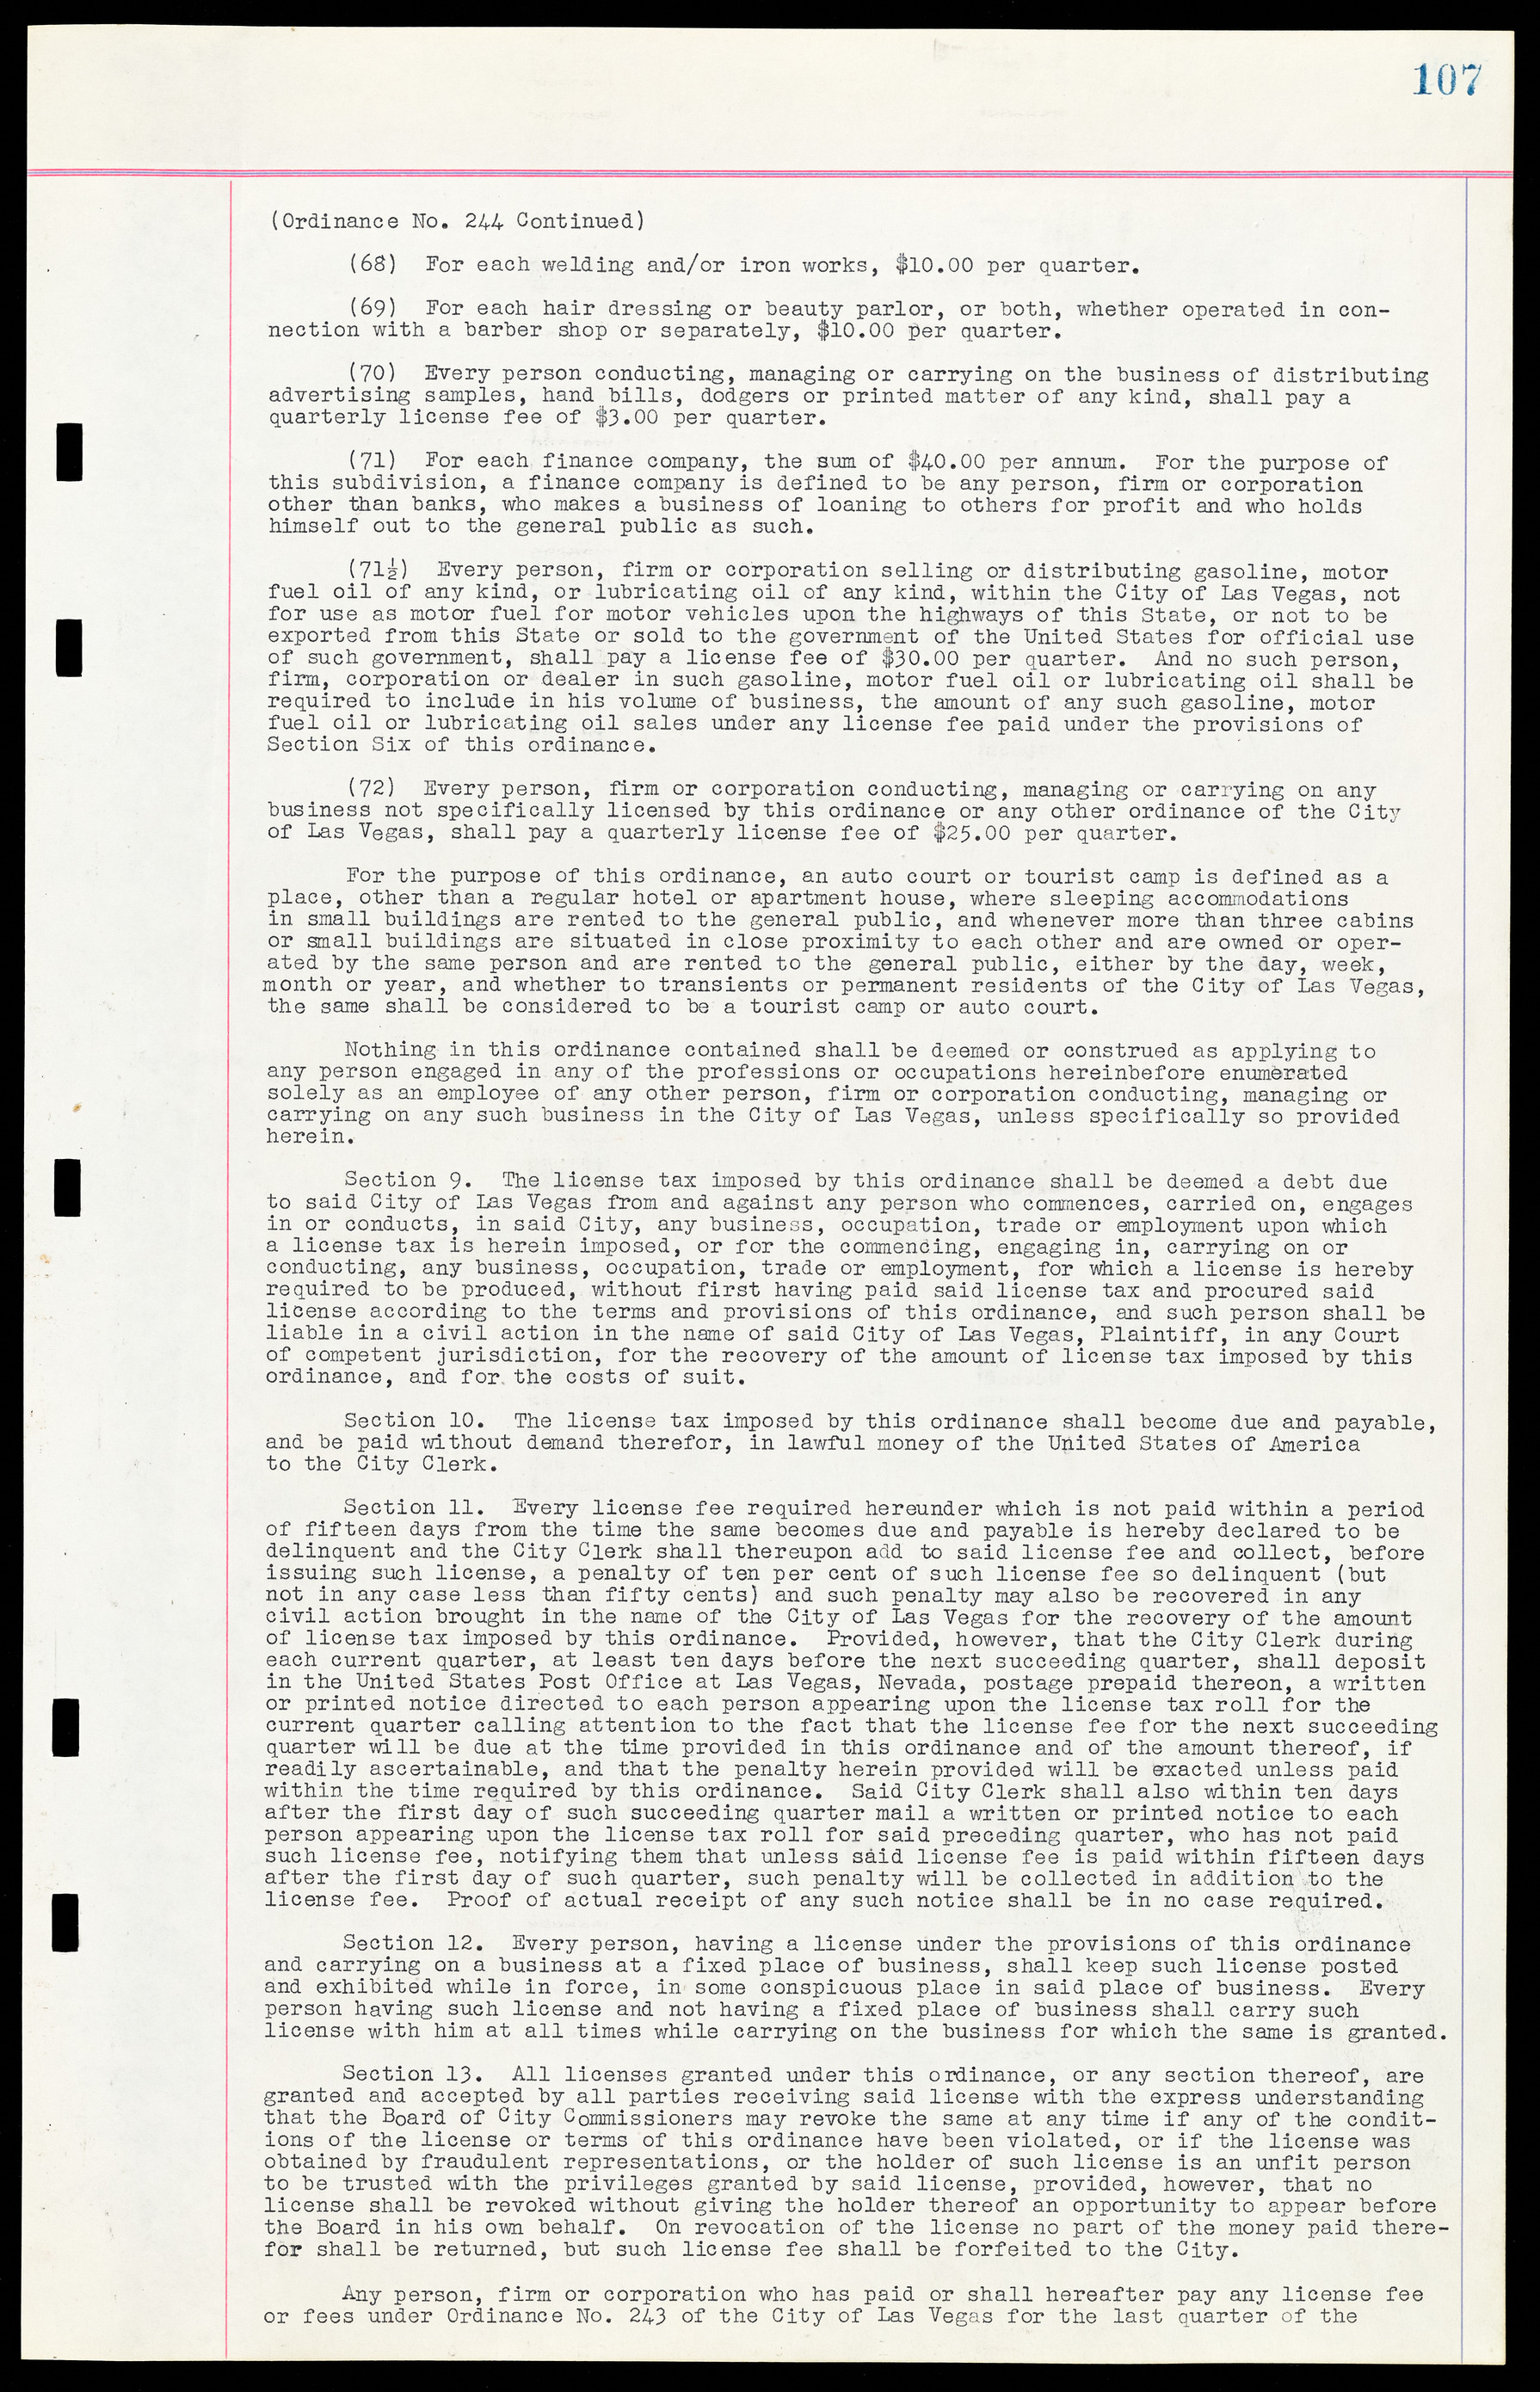 Las Vegas City Ordinances, March 31, 1933 to October 25, 1950, lvc000014-127